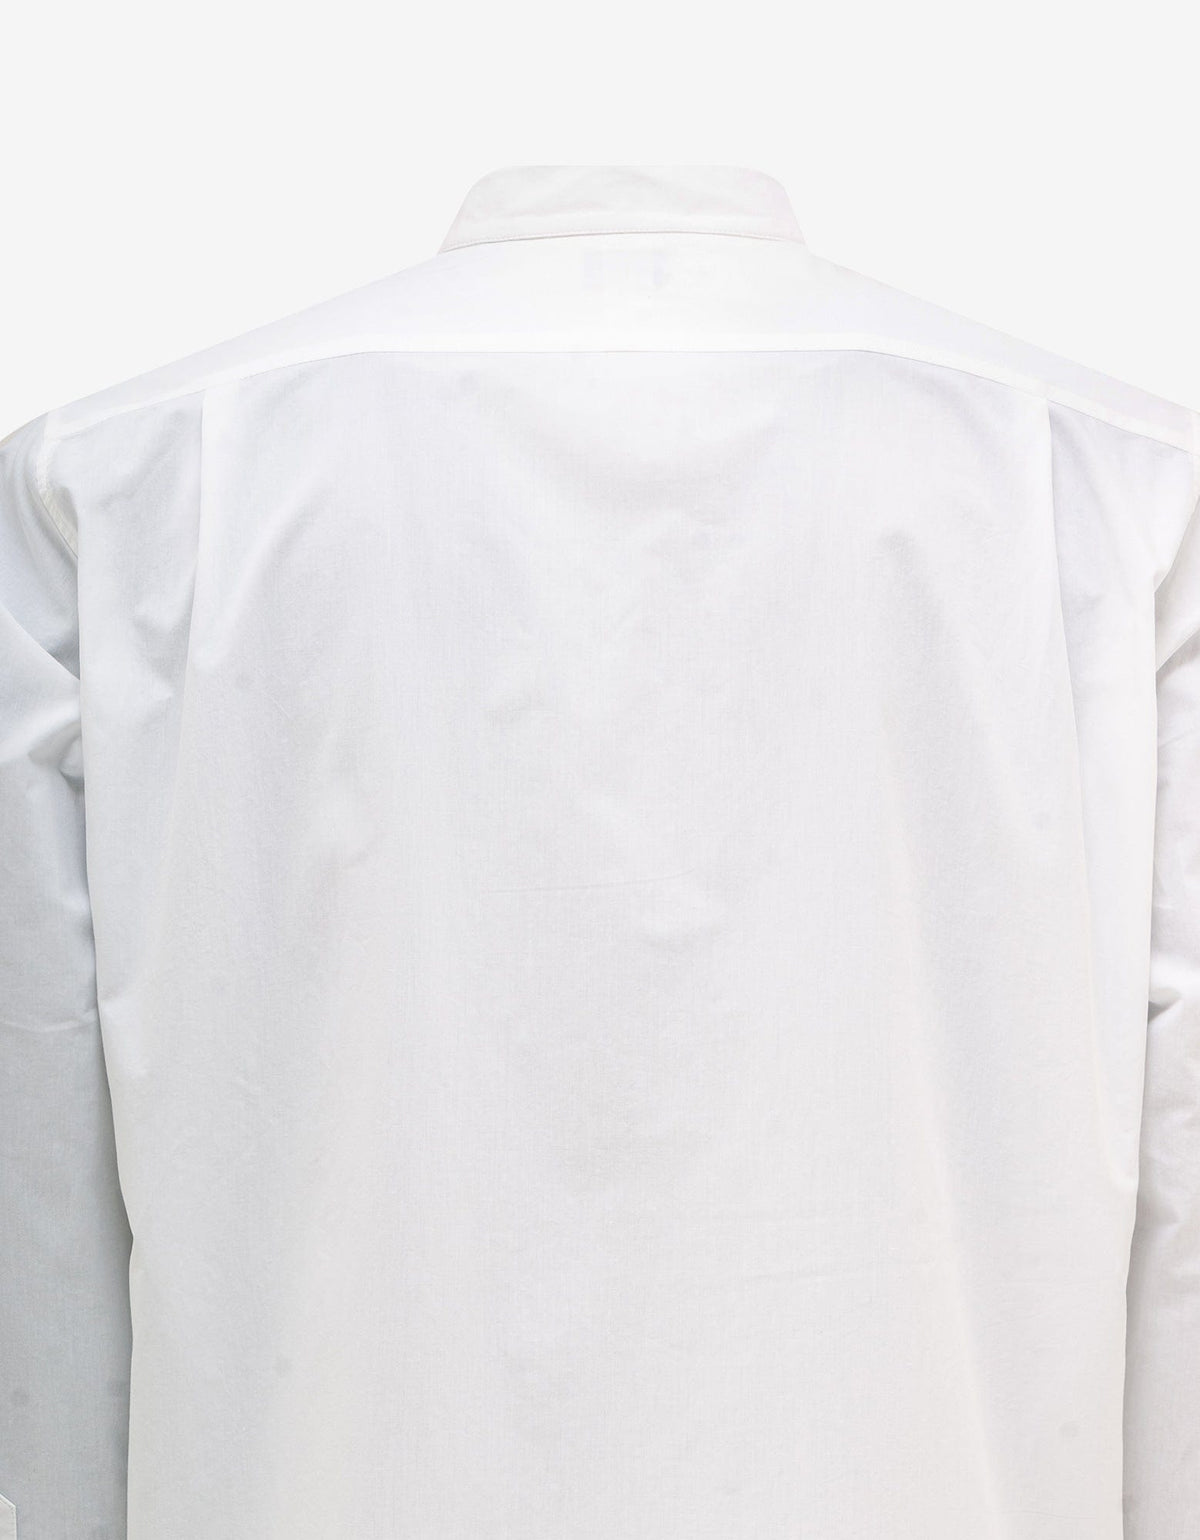 Kenzo White 'Target Flower' Shirt